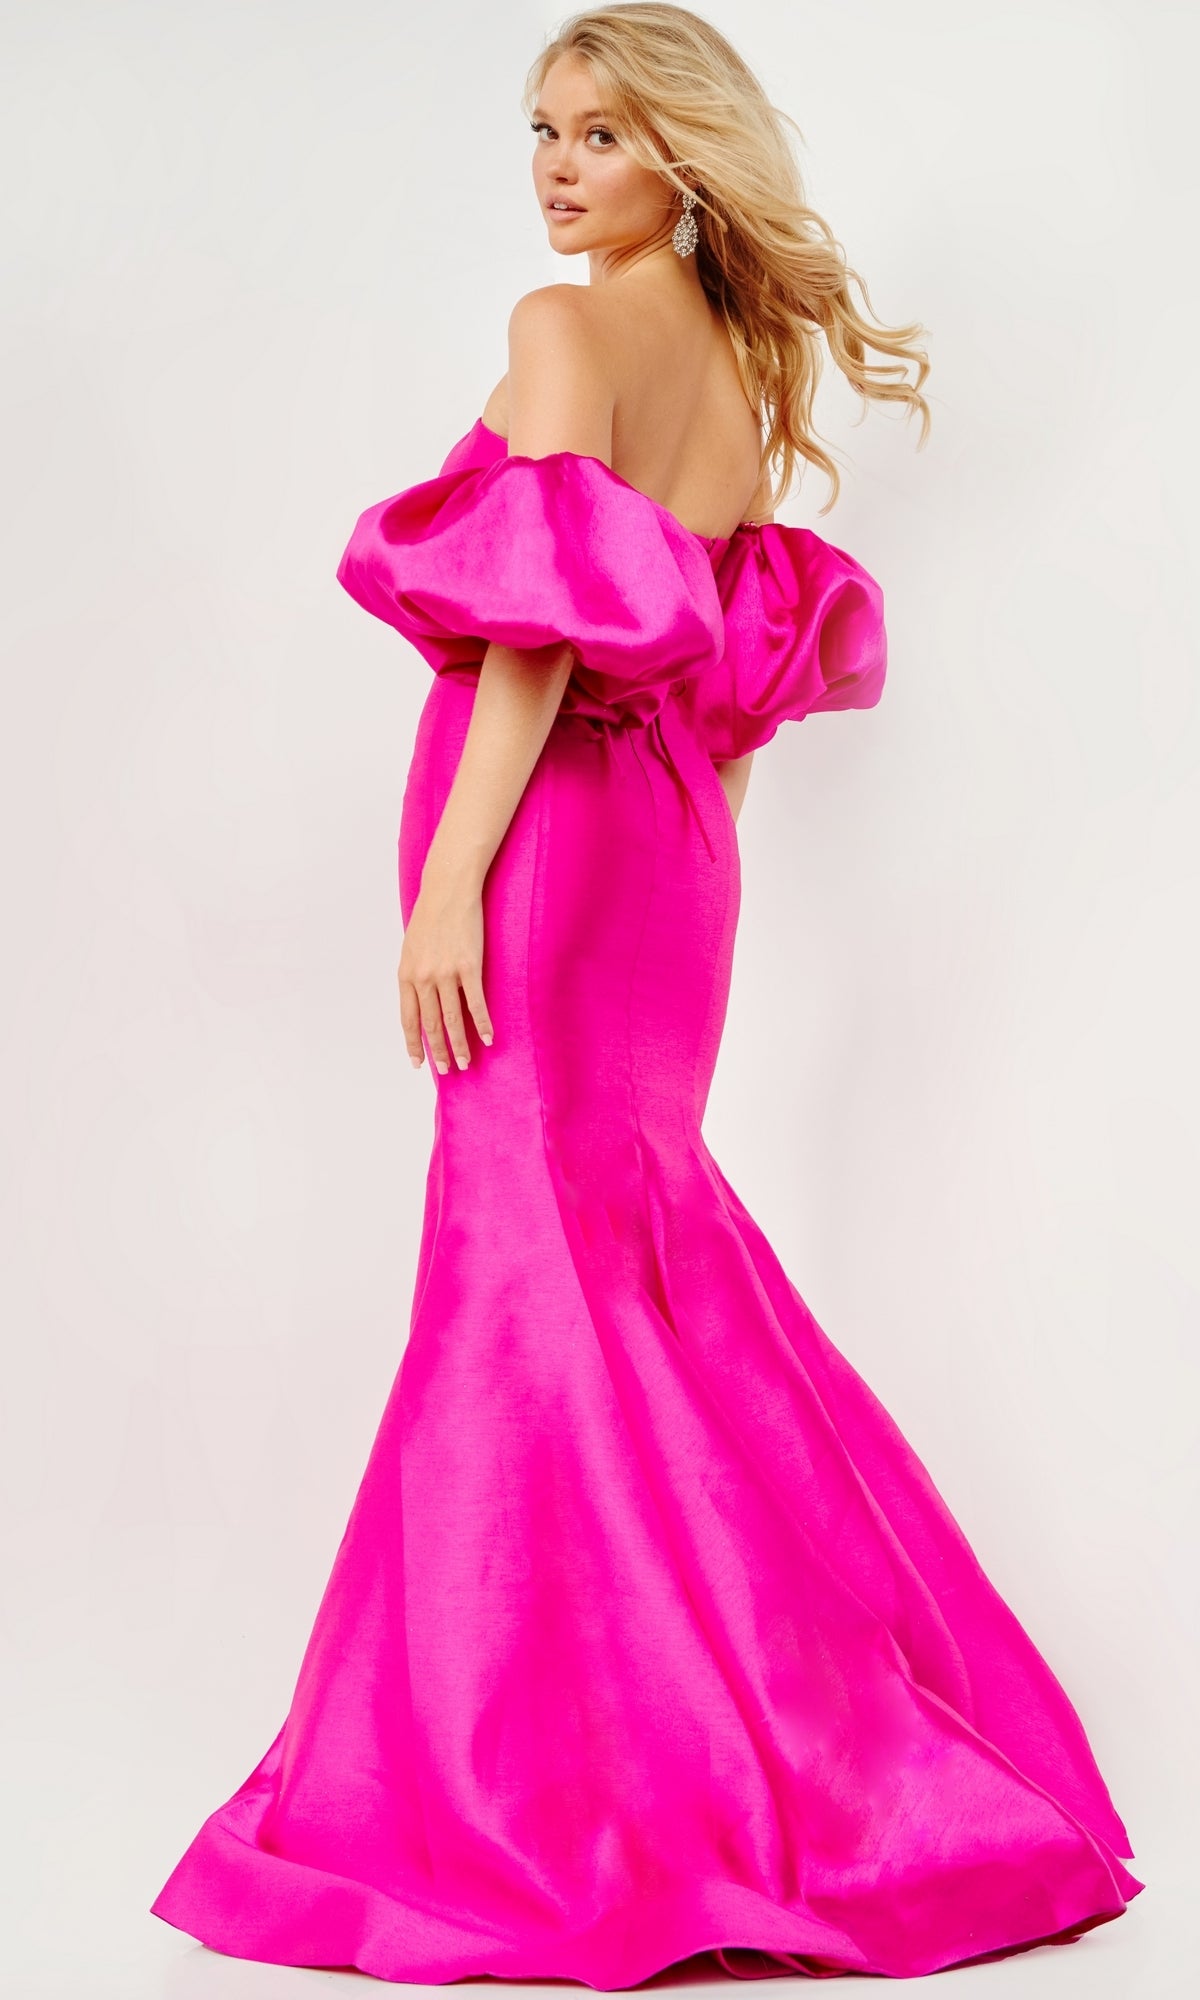 Puff-Sleeve Fuchsia Pink Prom Dress JVN22830